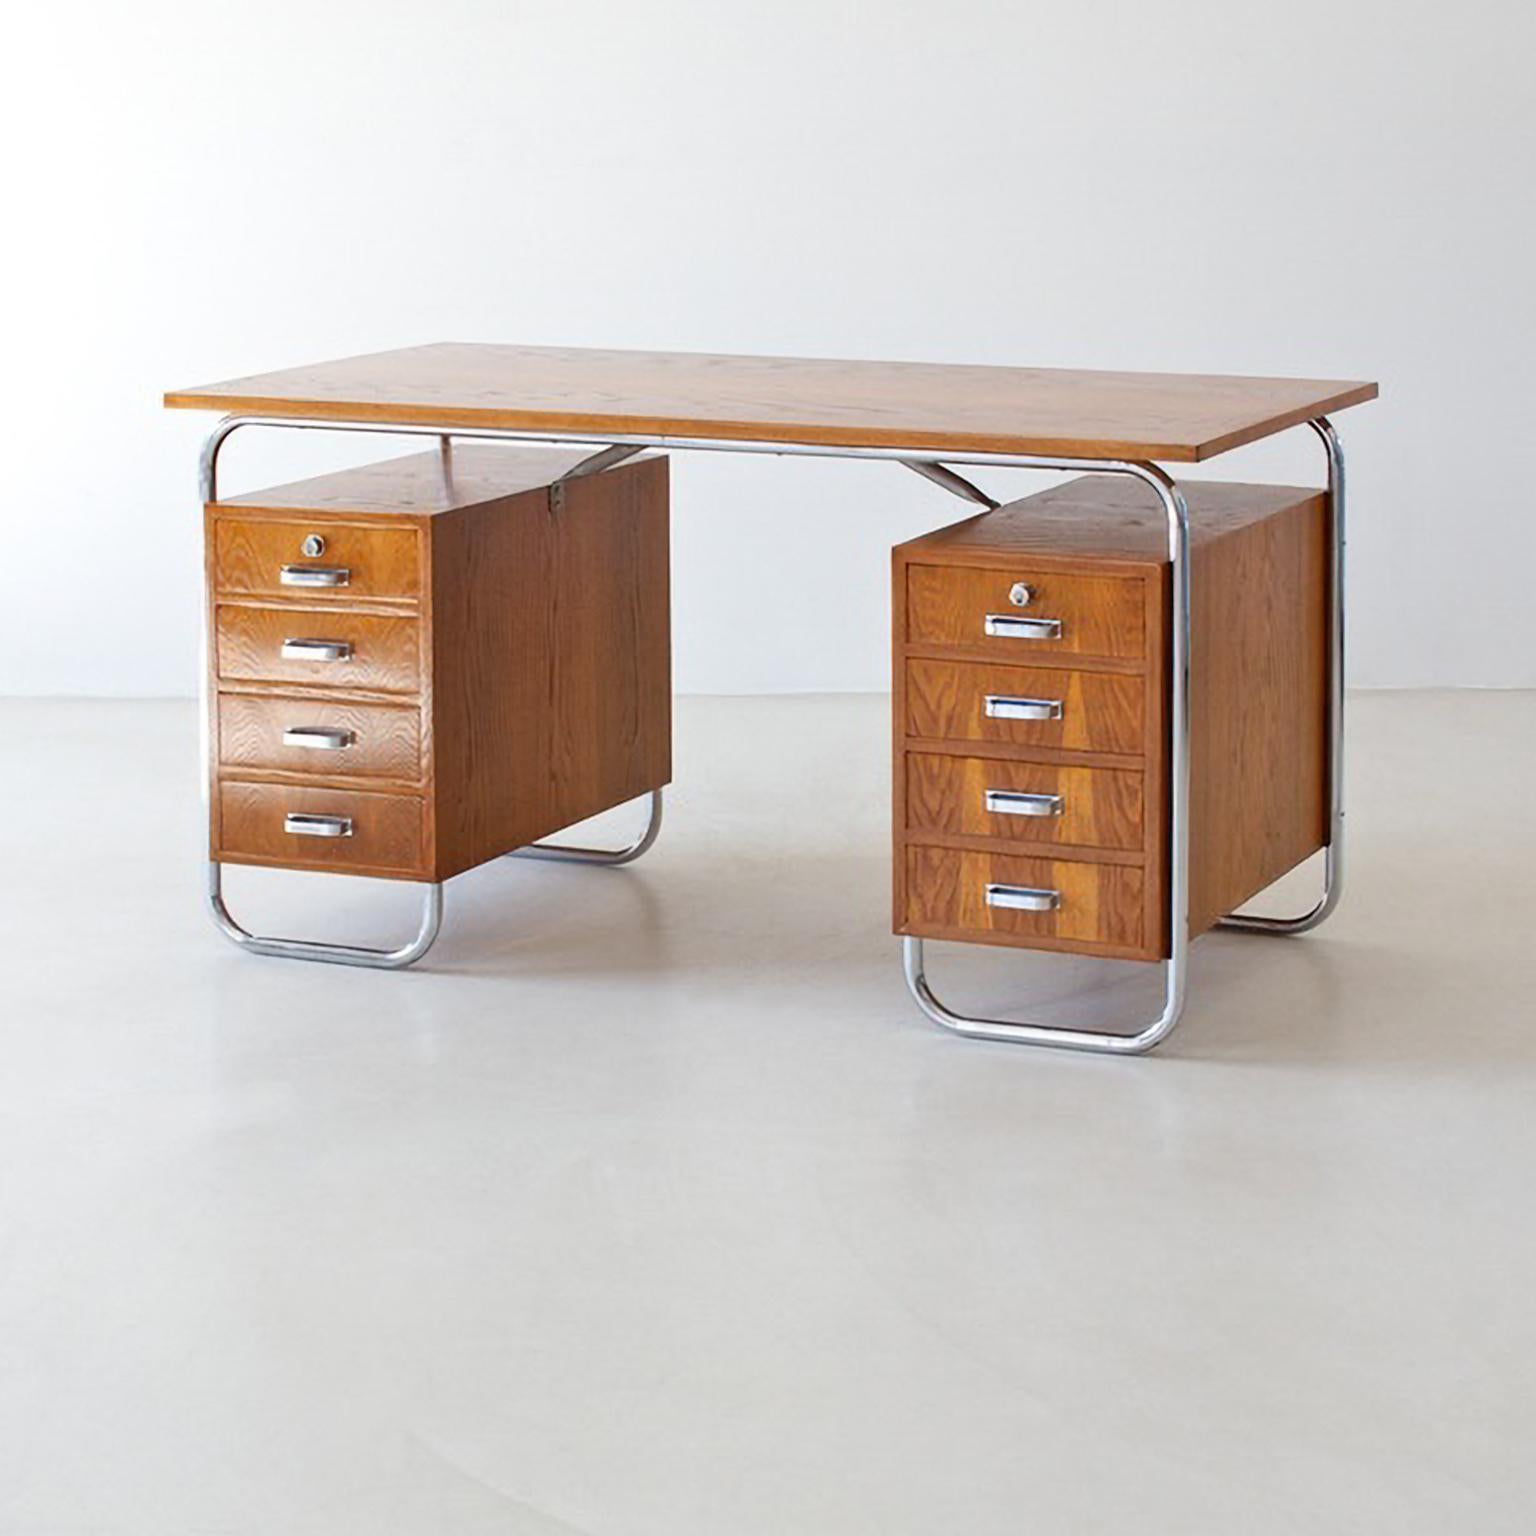 Czech Modernist Tubular Steel Desk with 2 Chests of Drawers, Chromed Metal, Oak Veneer For Sale